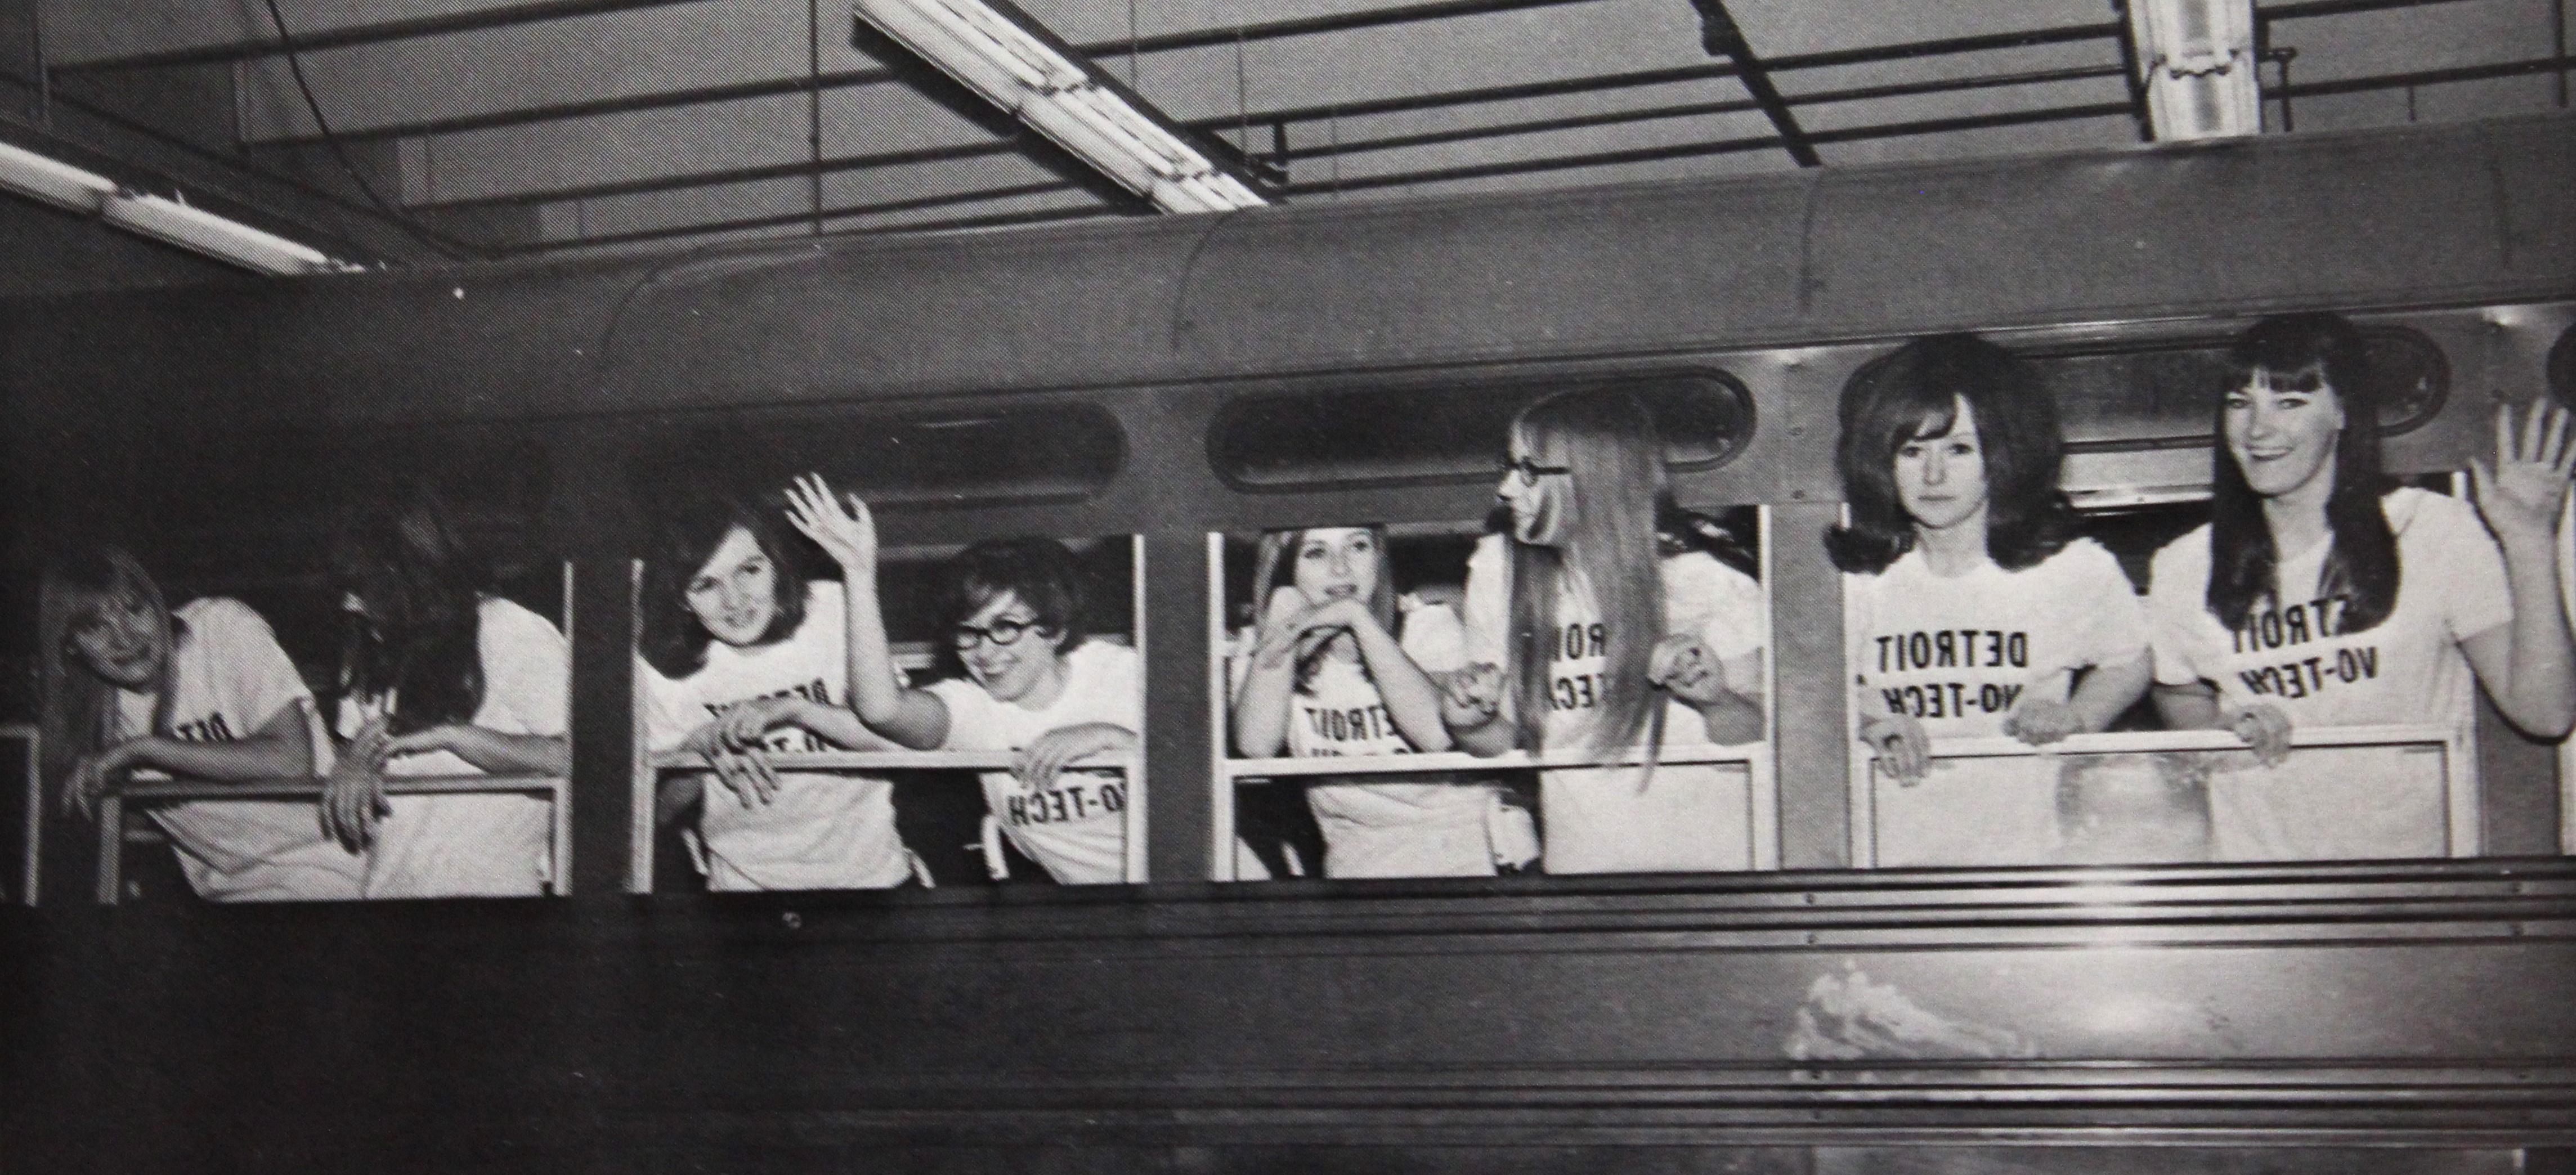 The 底特律的湖泊 campus Pep俱乐部, on a bus in 1970